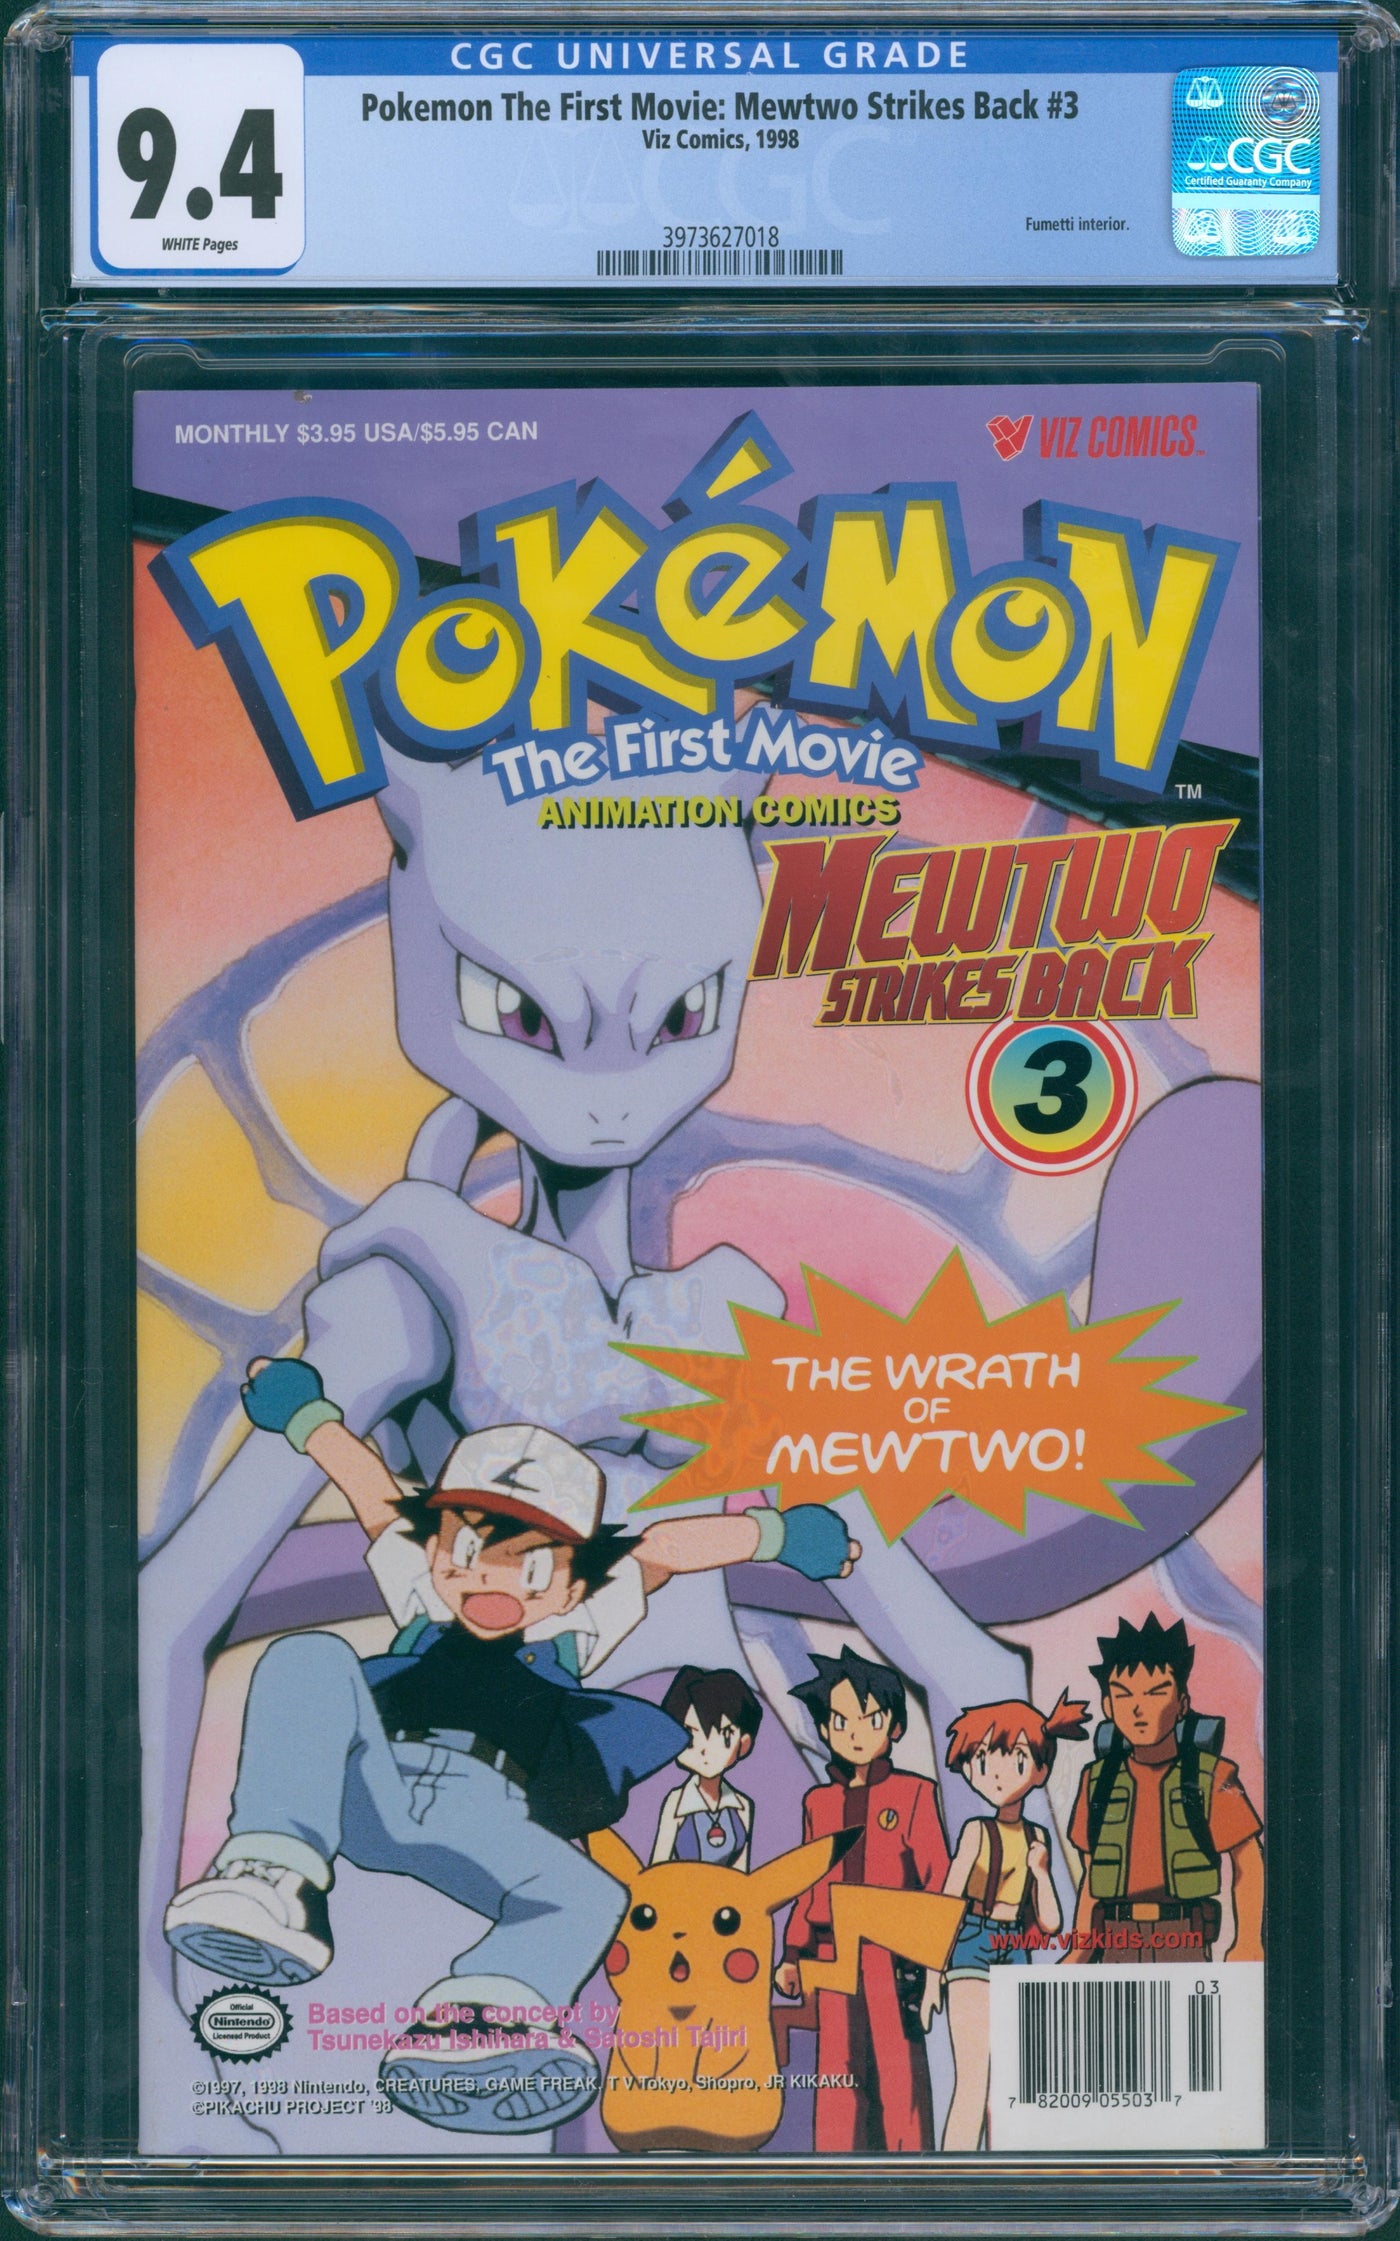 Pokémon the first movie; mewtwo strikes back #3 CGC 9.4